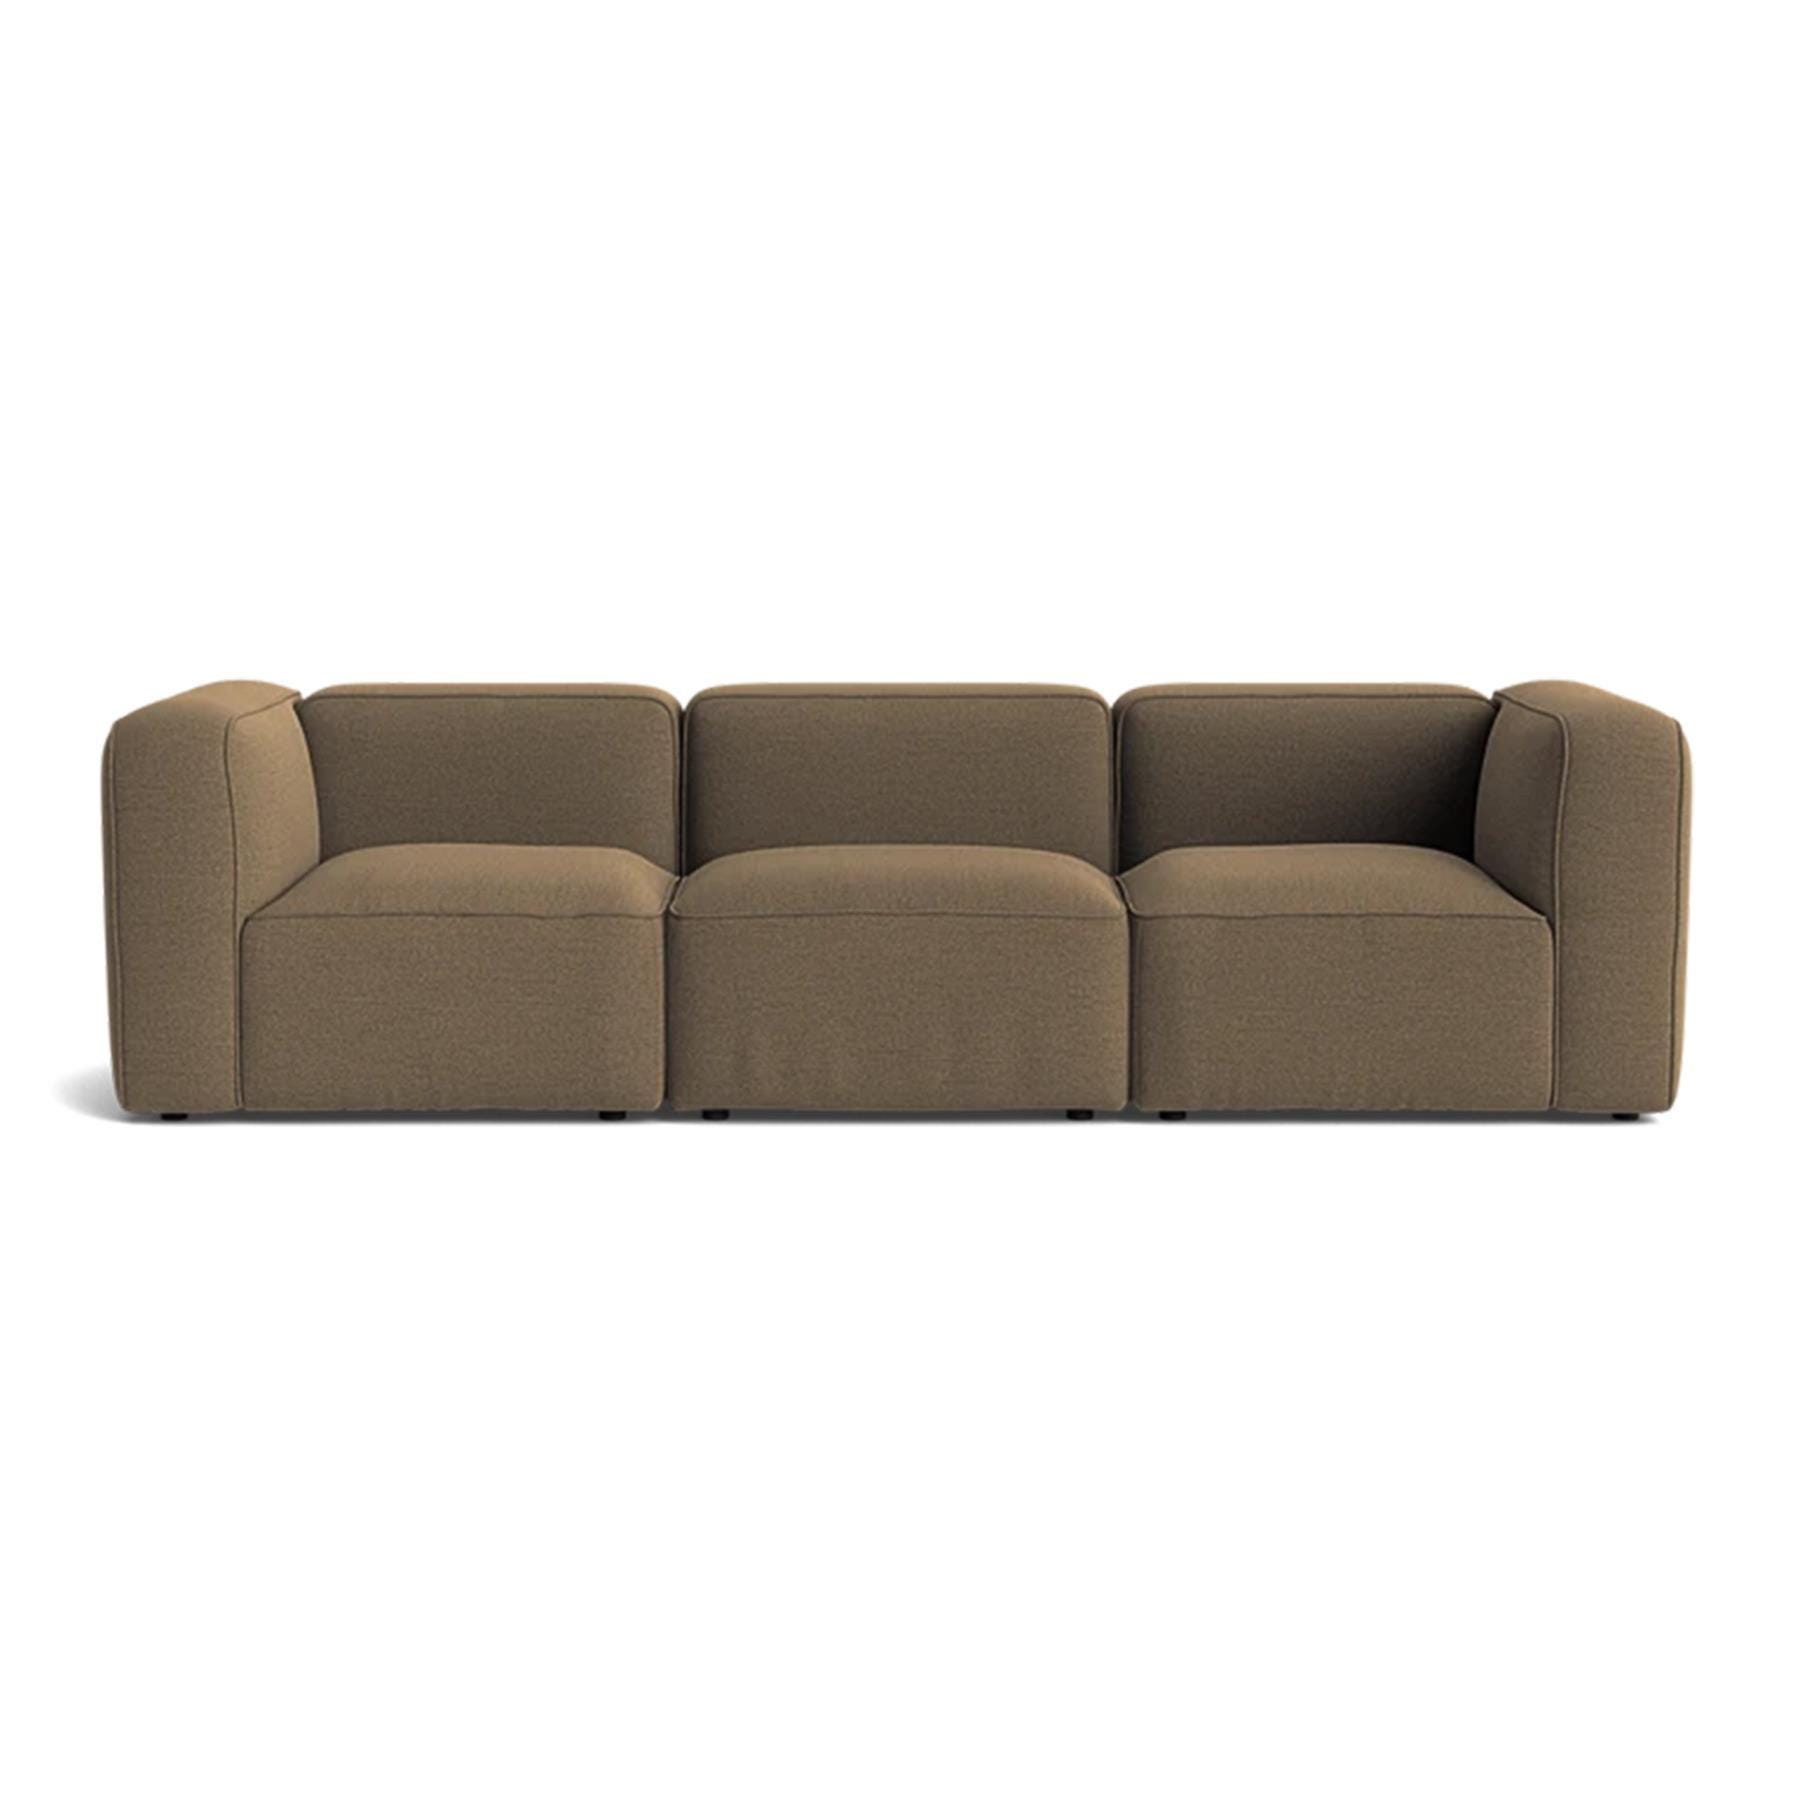 Make Nordic Basecamp 3 Seater Sofa Rewool 358 Brown Designer Furniture From Holloways Of Ludlow